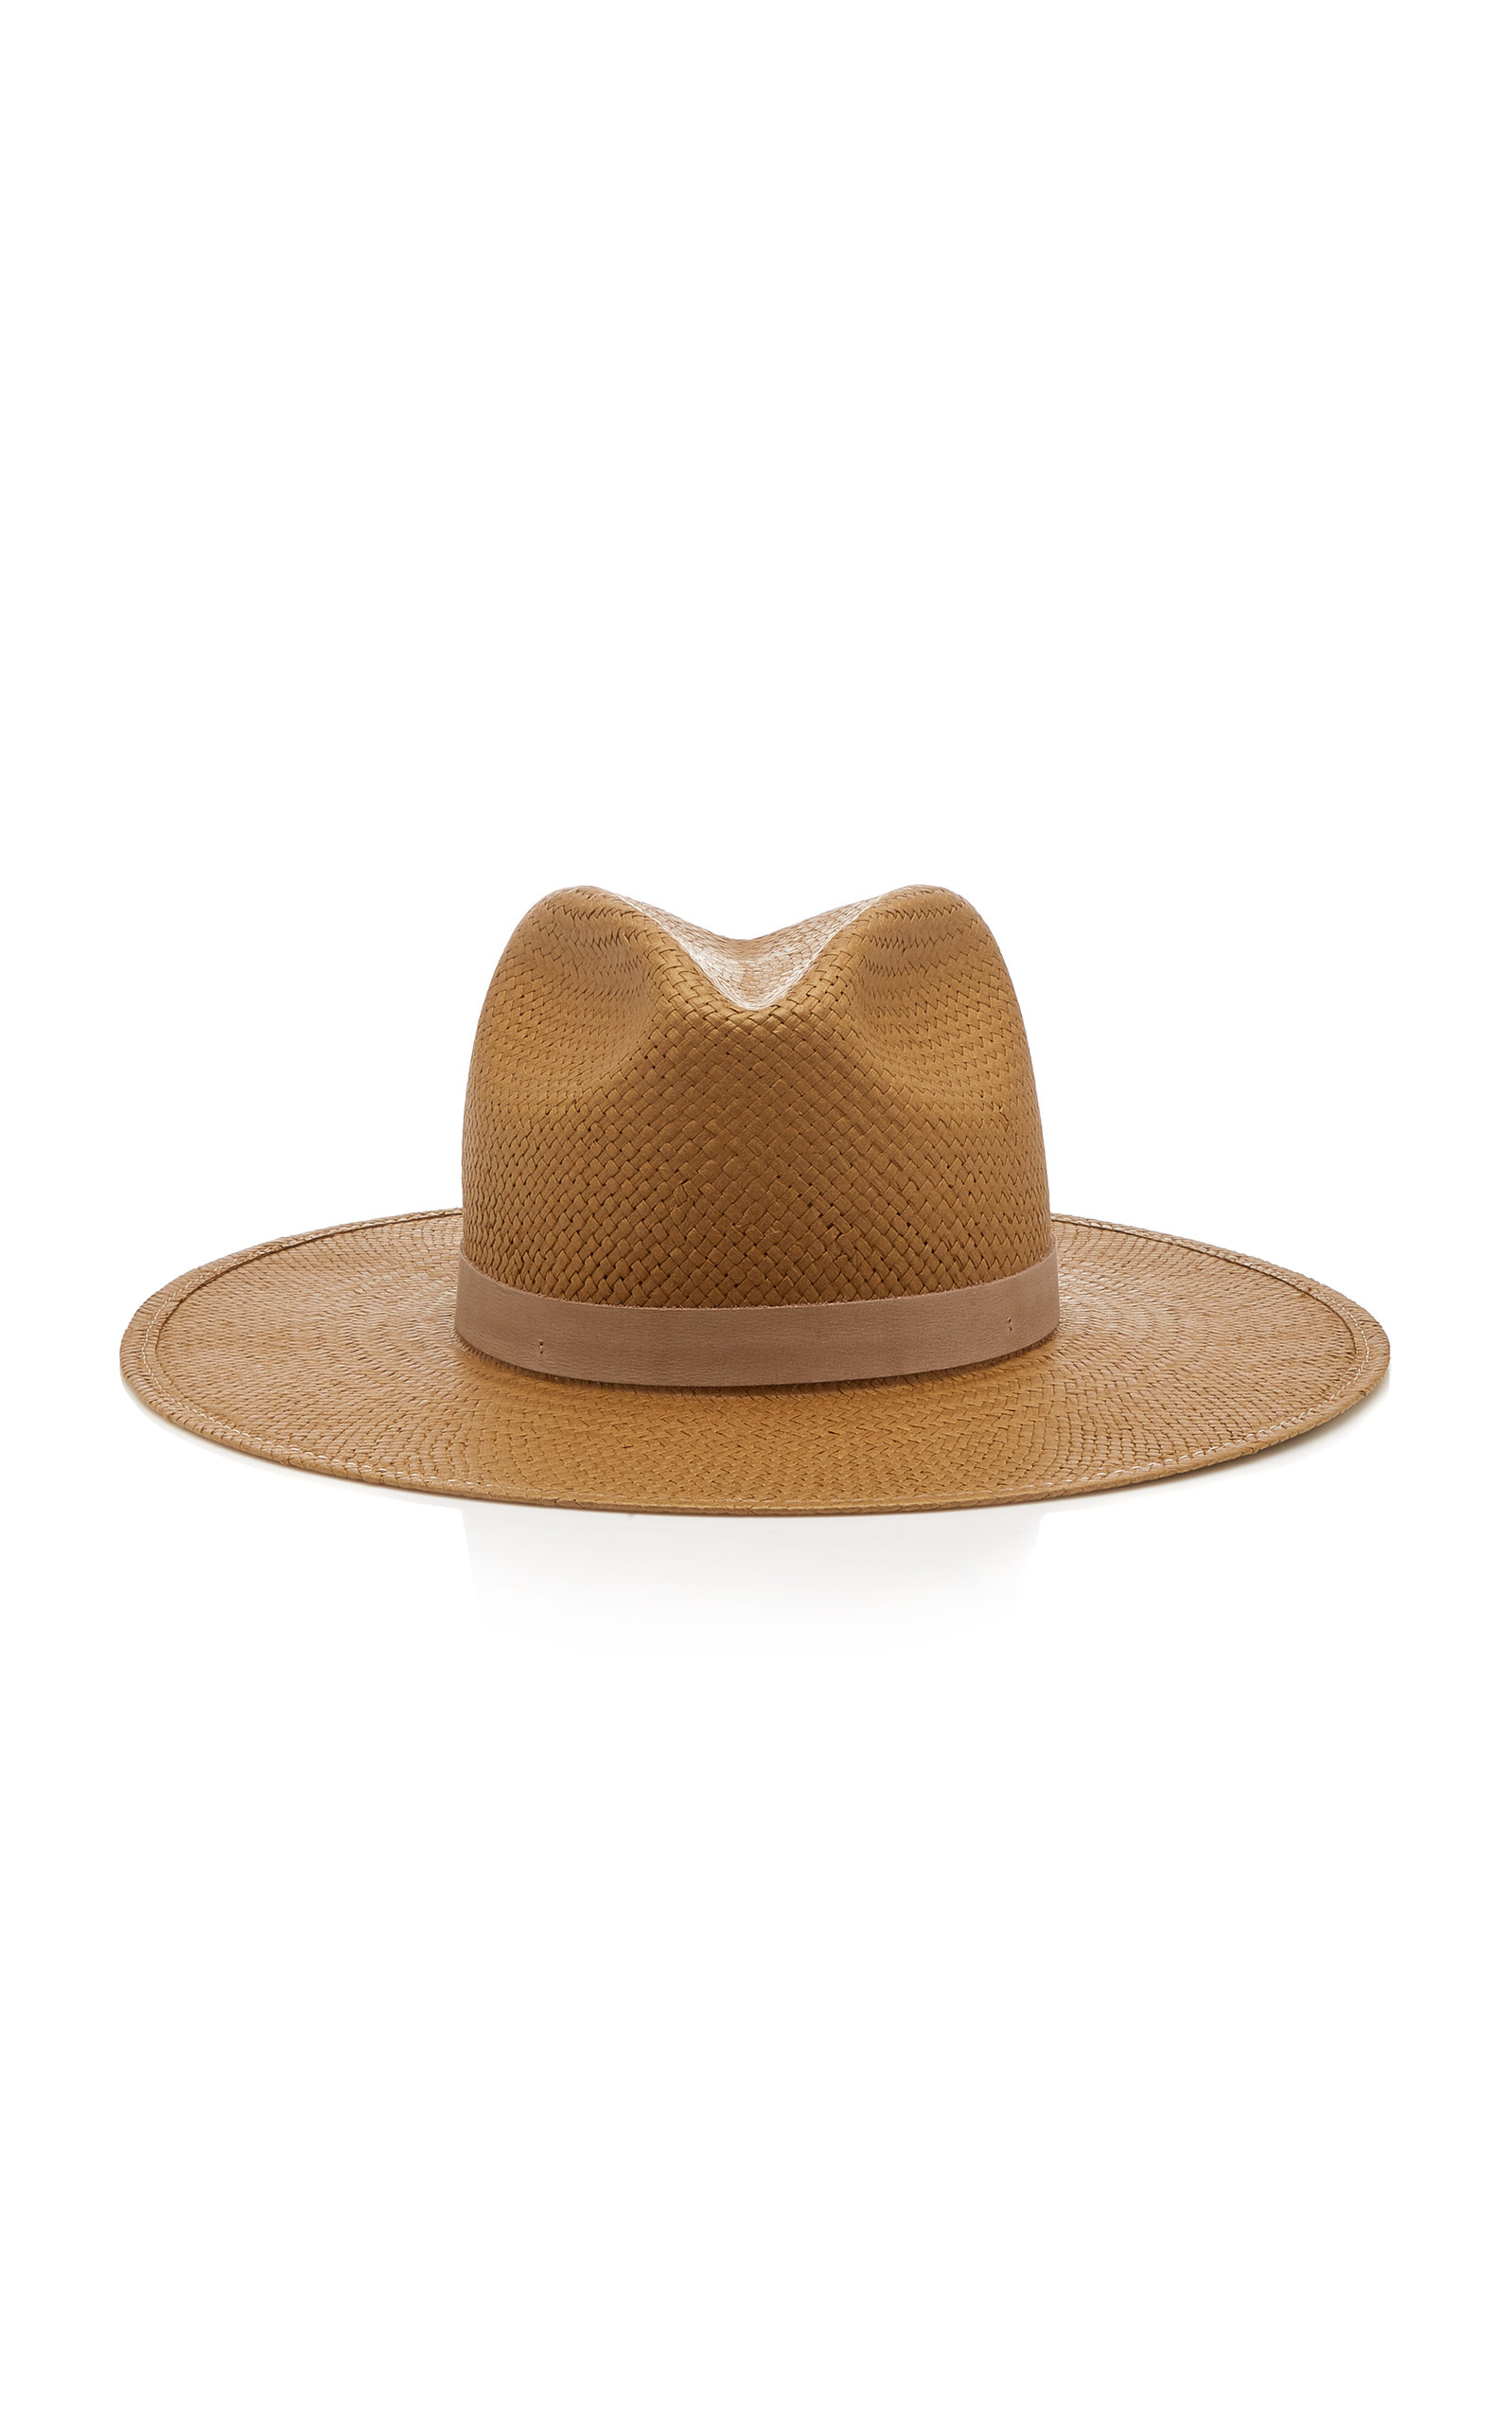 Janessa Leone Women's Adriana Packable Straw Hat